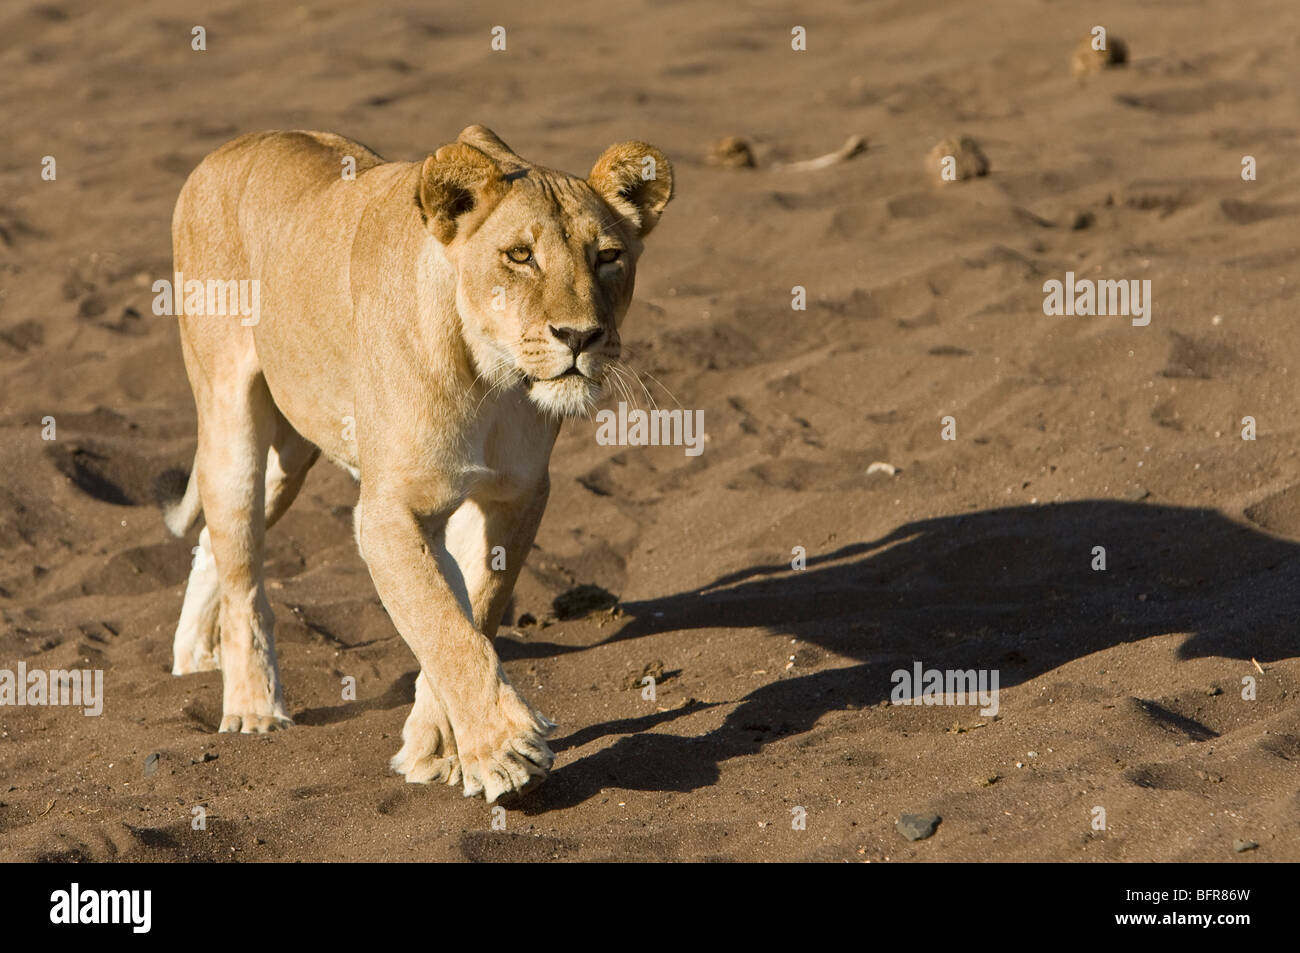 Lioness walking in desert sand Stock Photo